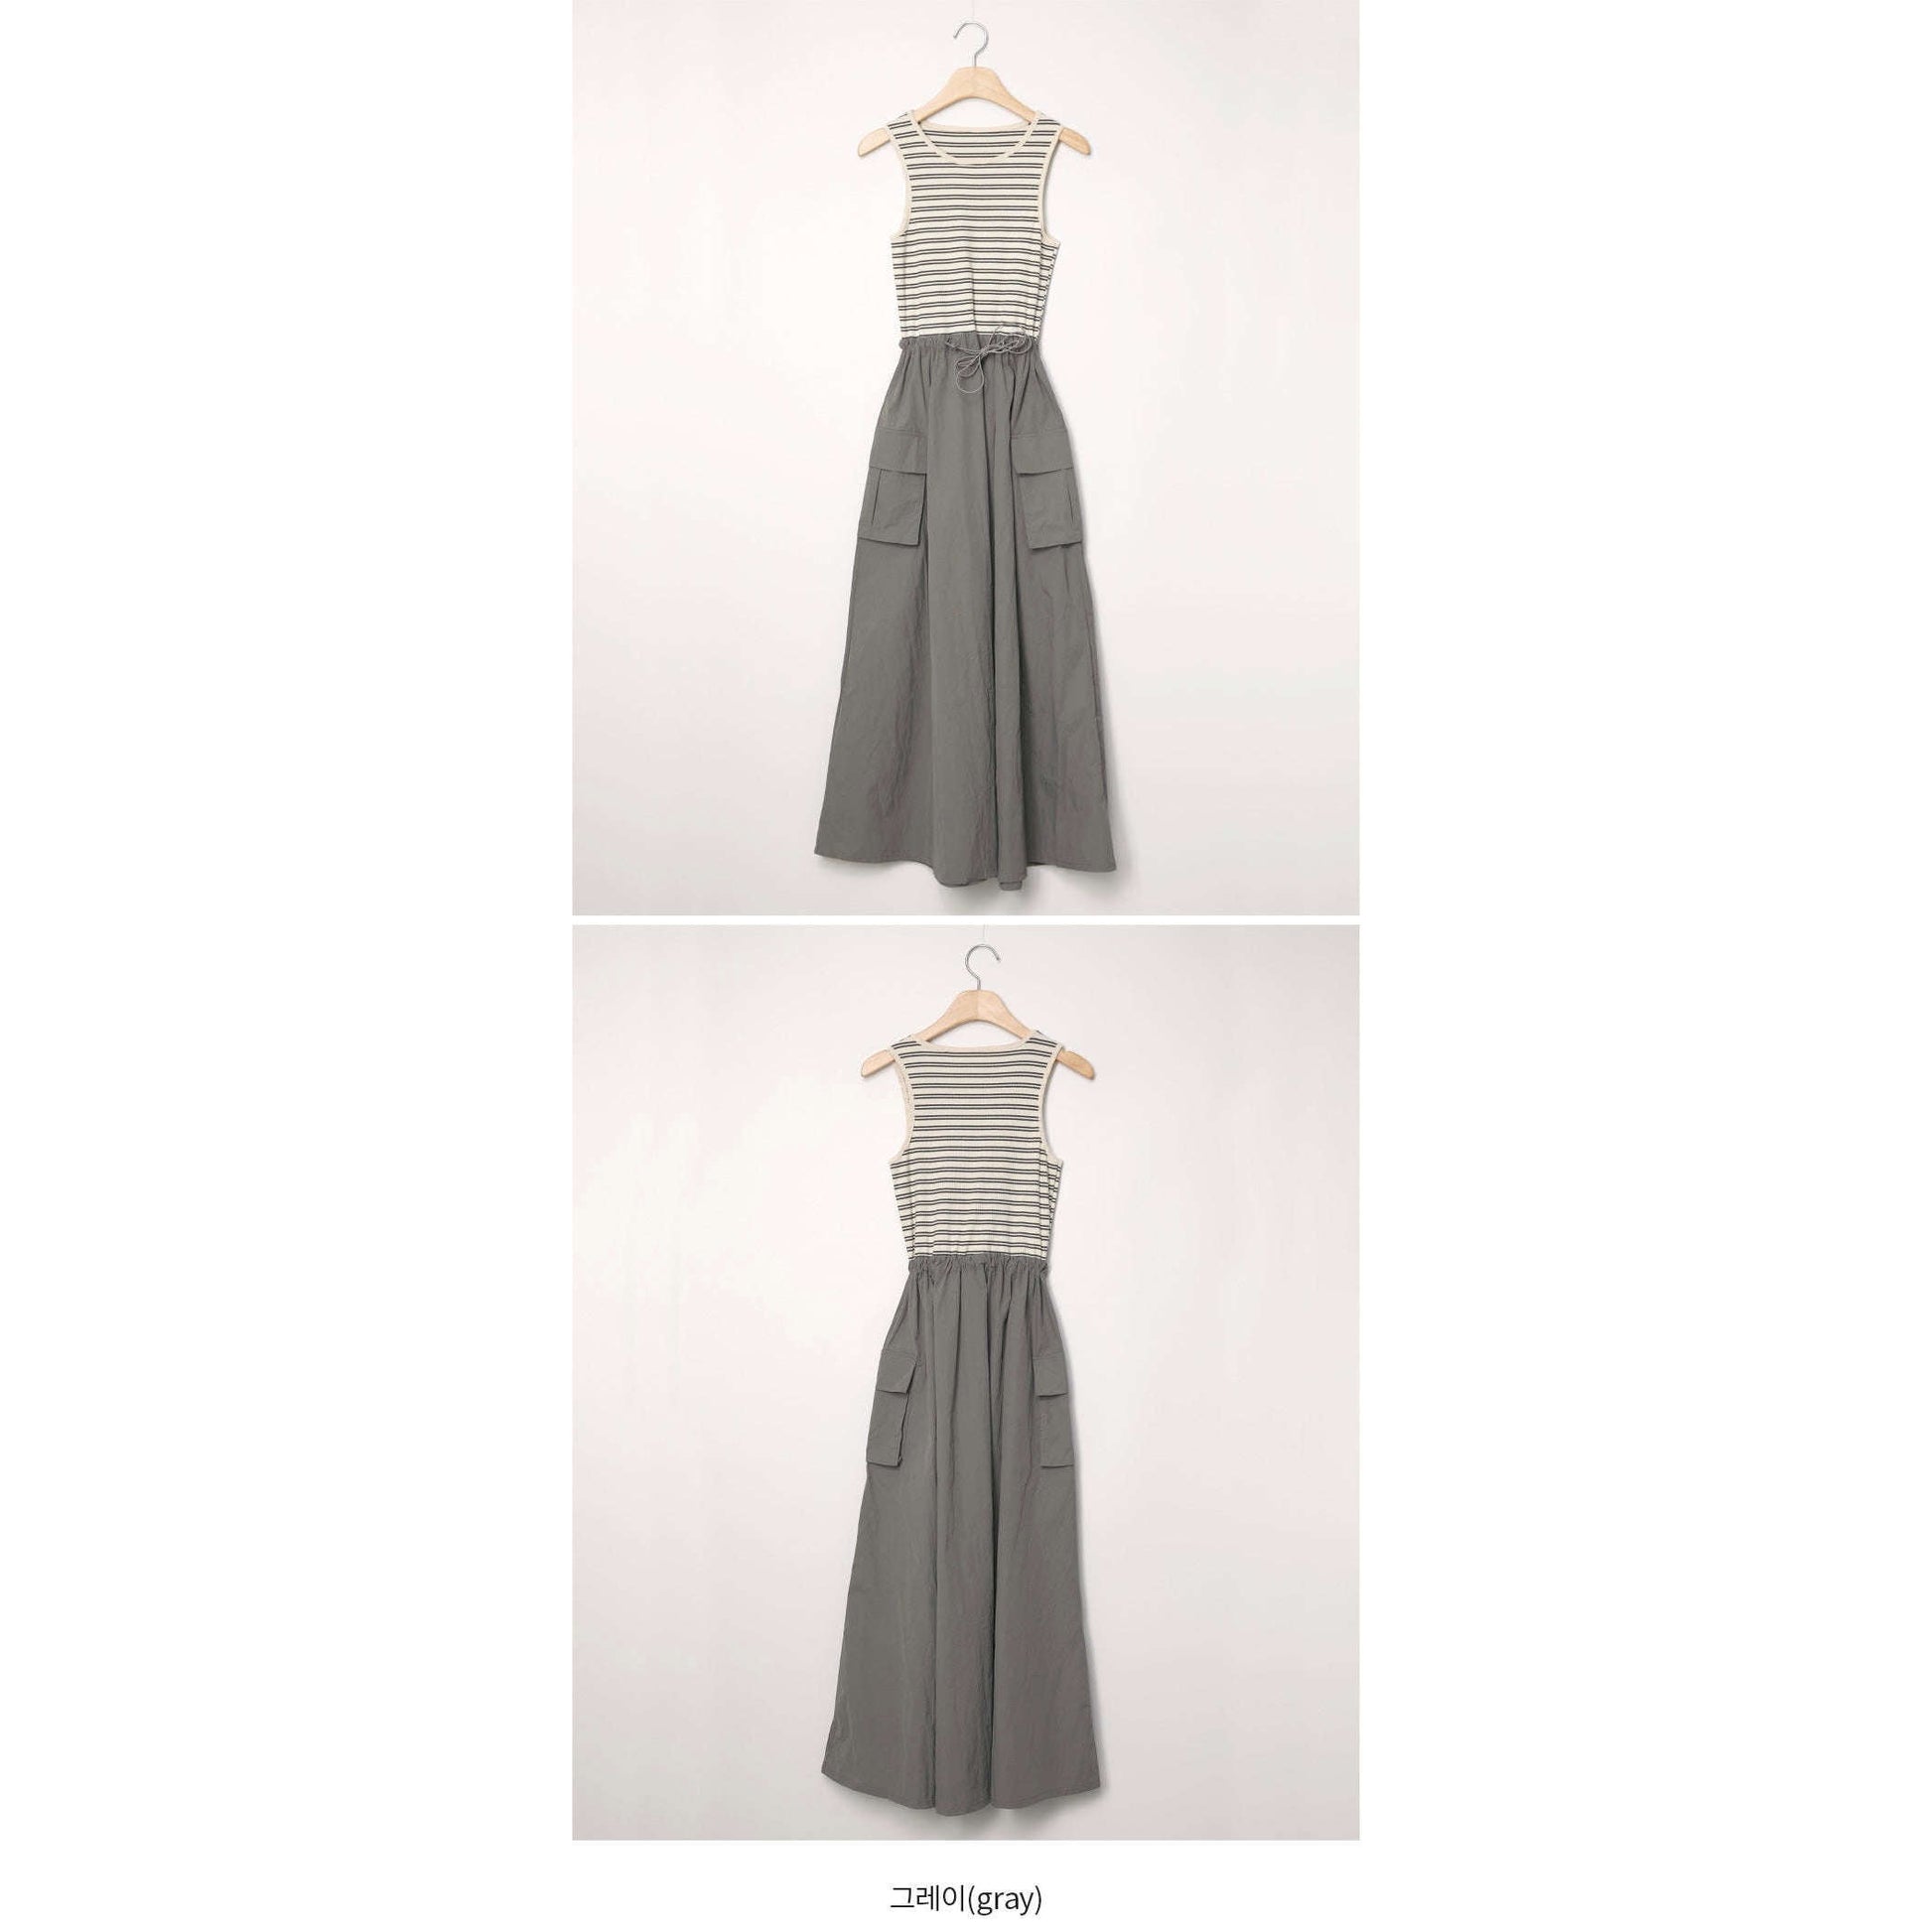 MUMMY.cc:條紋背心針織背心裙加短外套套裝:Grey